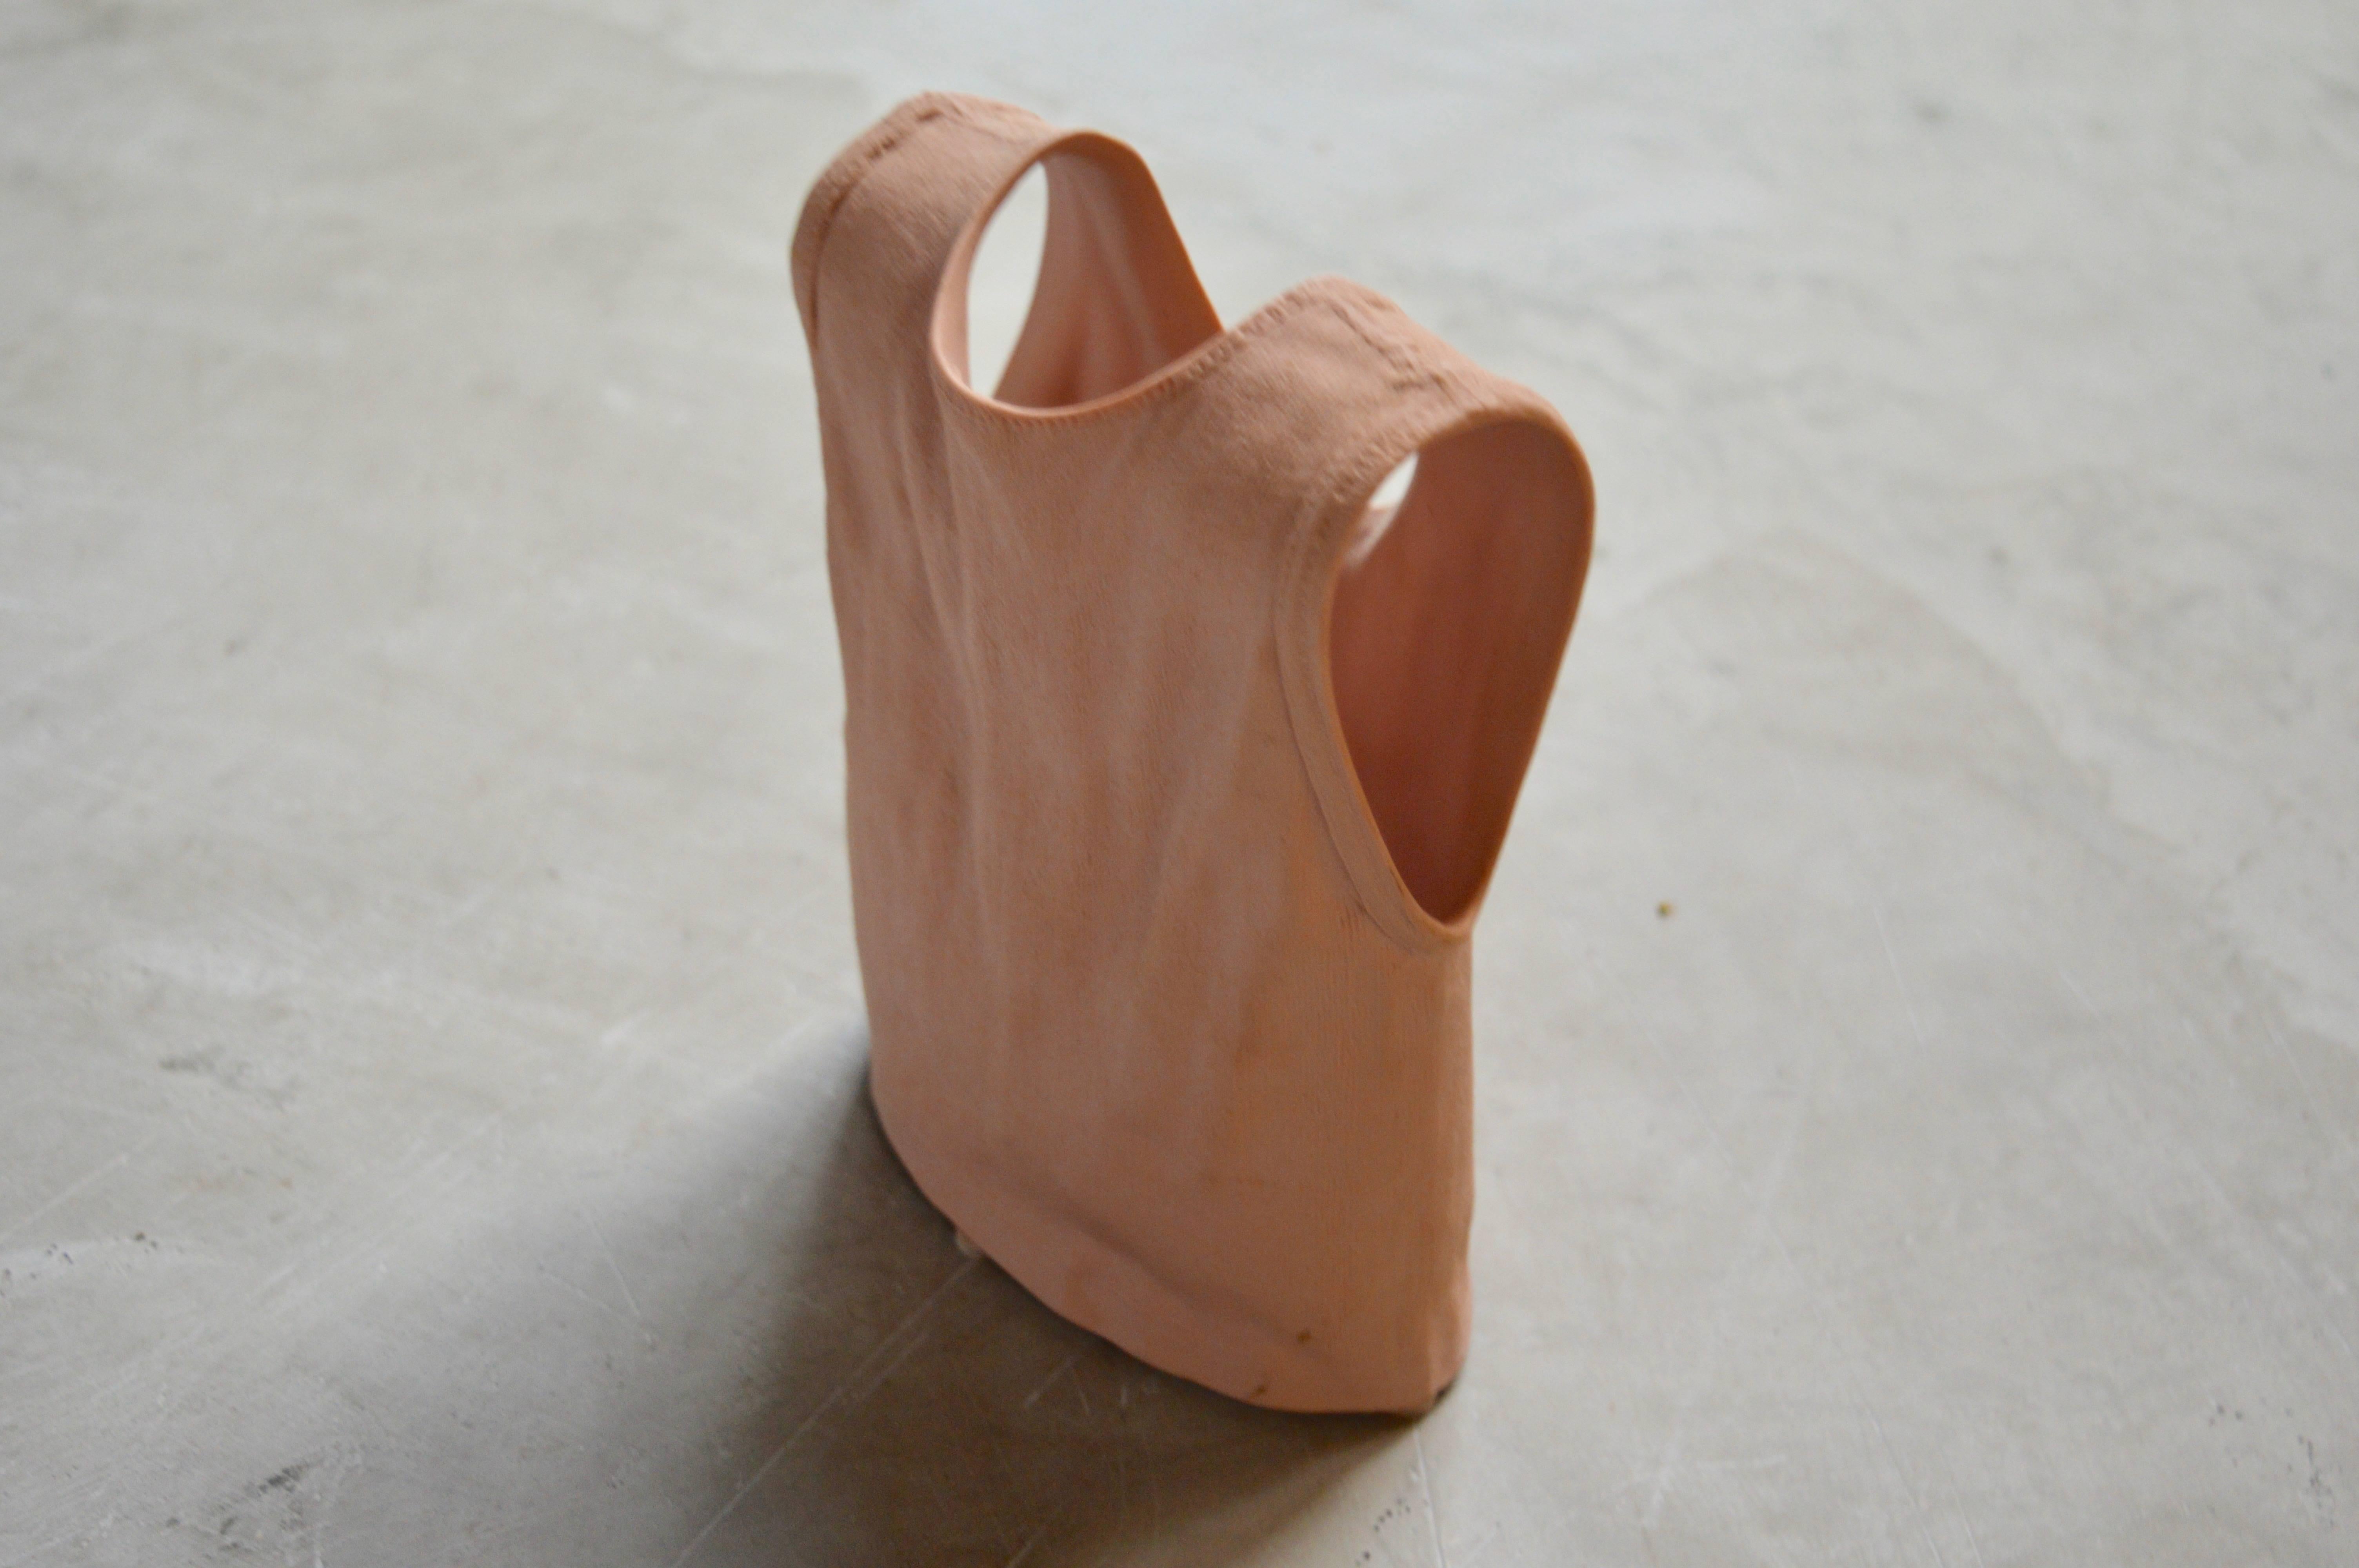 Einzigartige T-Shirt-Vase aus rosa Keramik. Sehr interessantes skulpturales Objekt. Größere Keramik-T-Shirt-Vase in separatem Angebot erhältlich. Die passende T-Shirt-Vase ist in einem separaten Angebot in Hellblau erhältlich. Ausgezeichneter